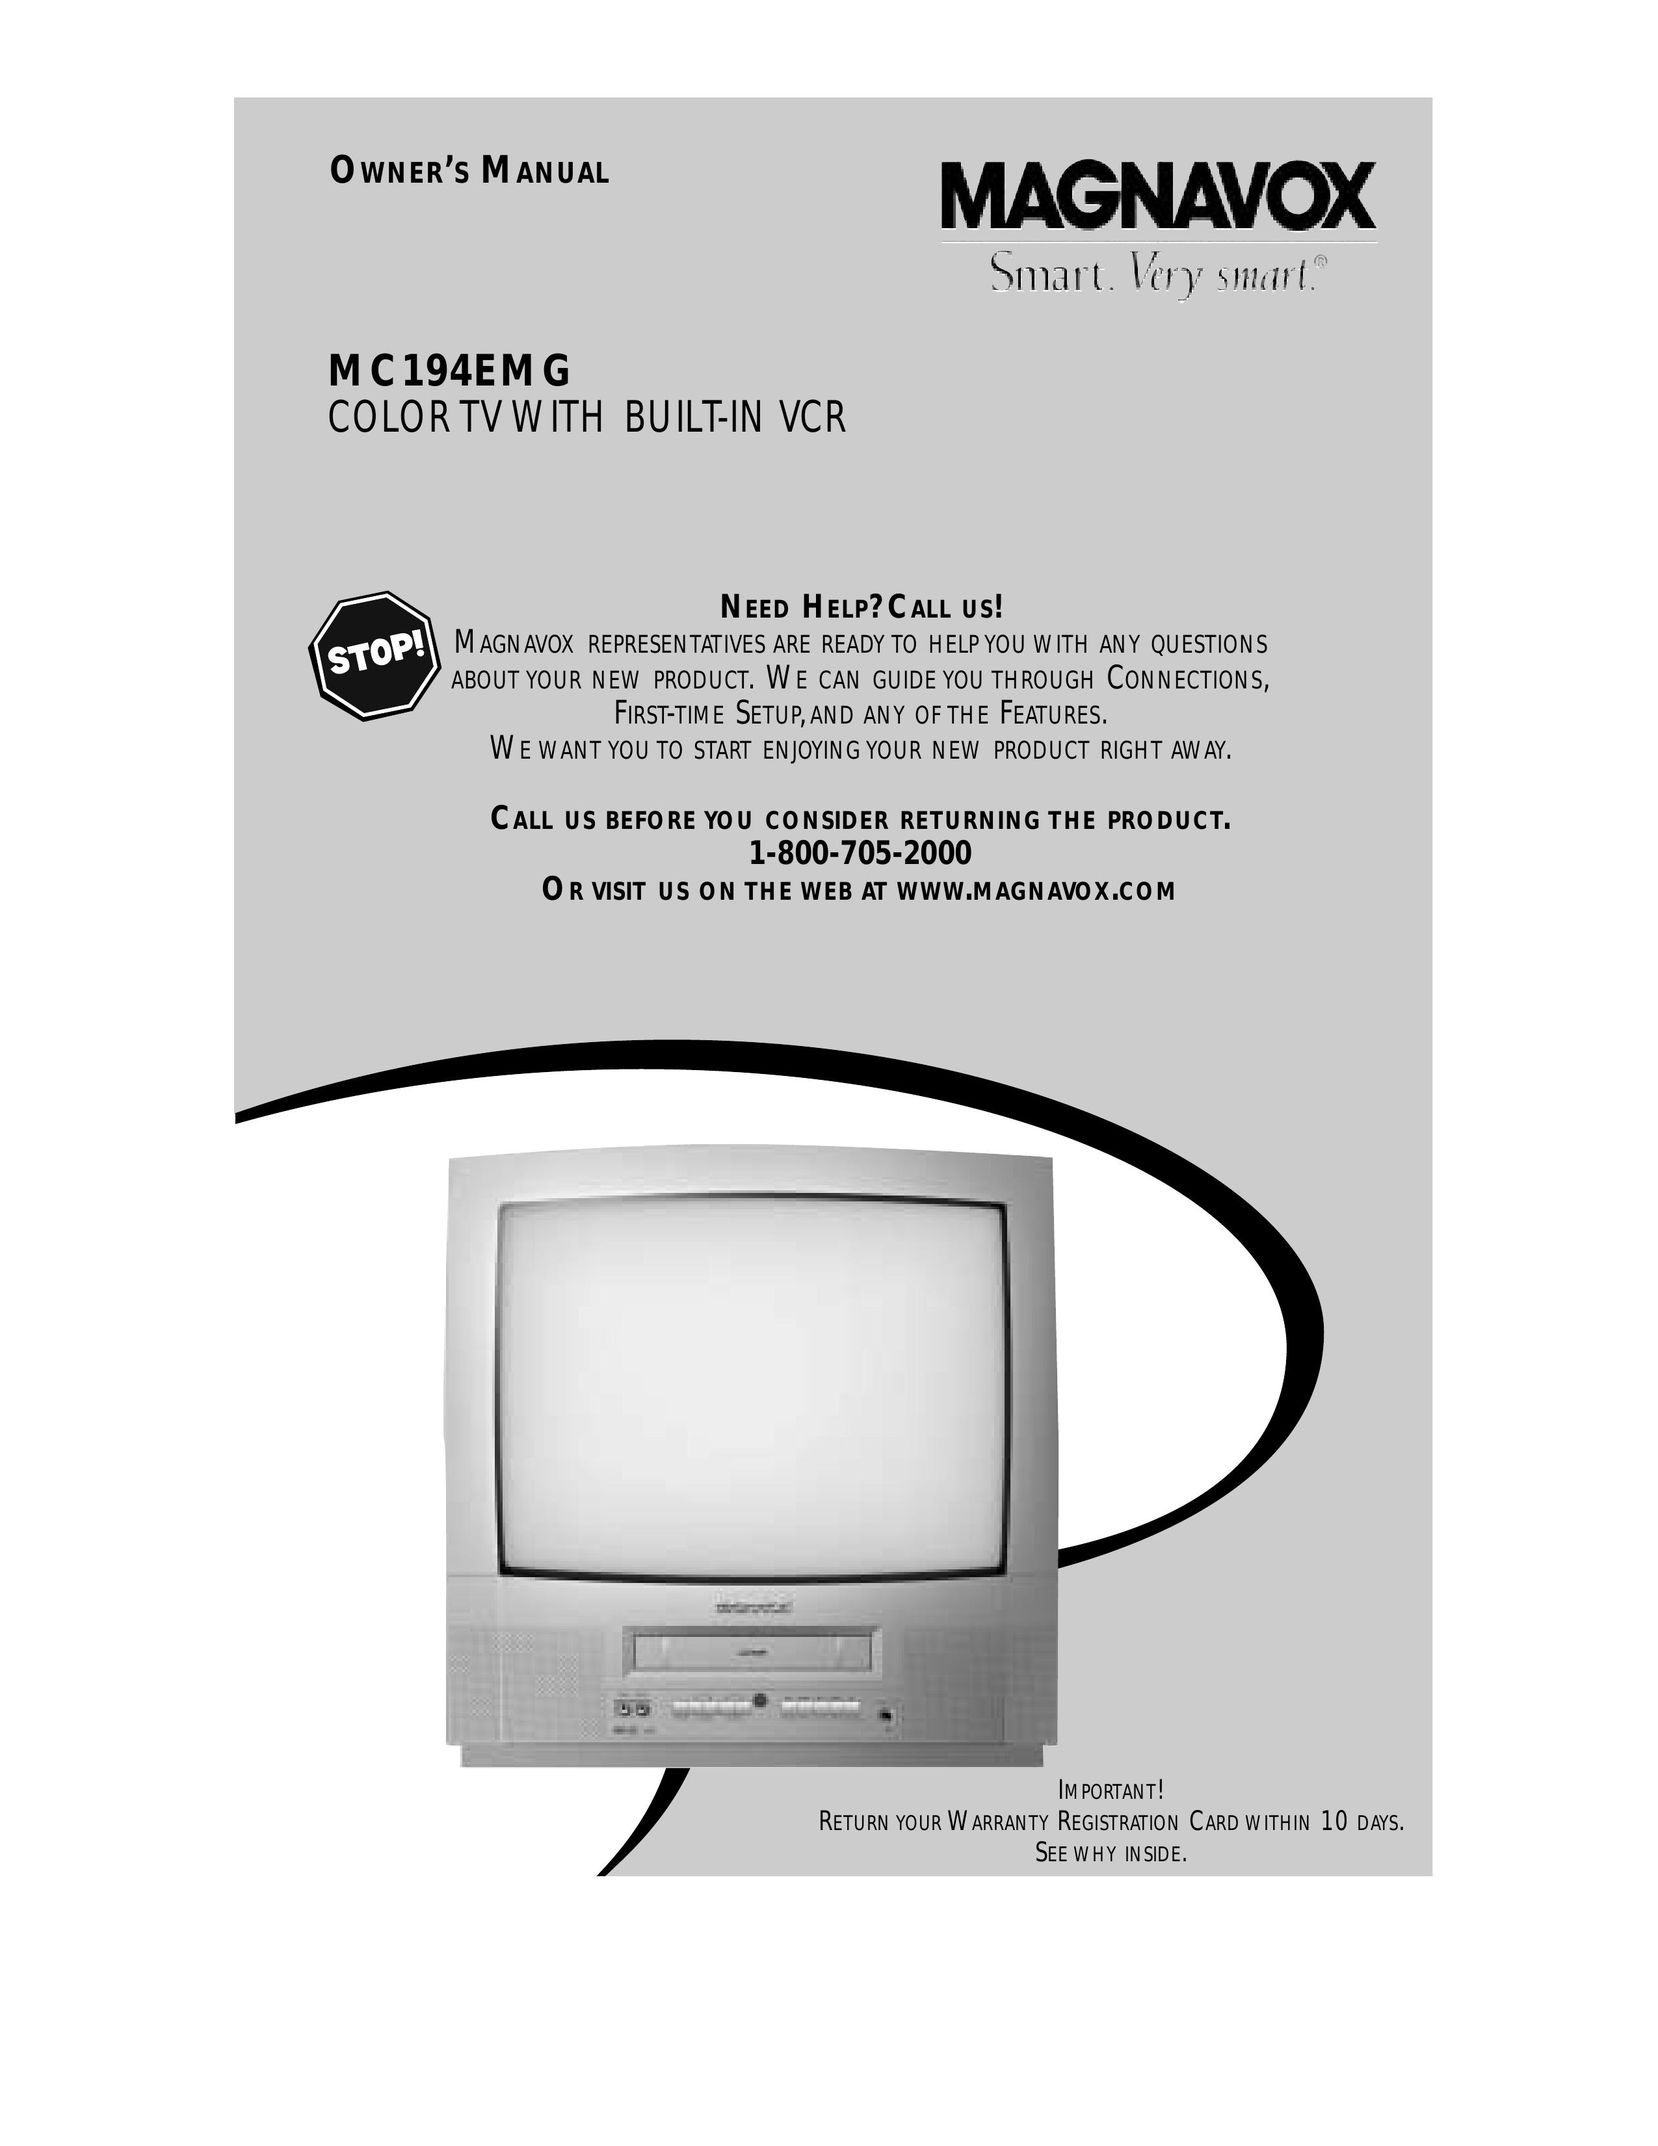 Magnavox MC194EMG TV VCR Combo User Manual